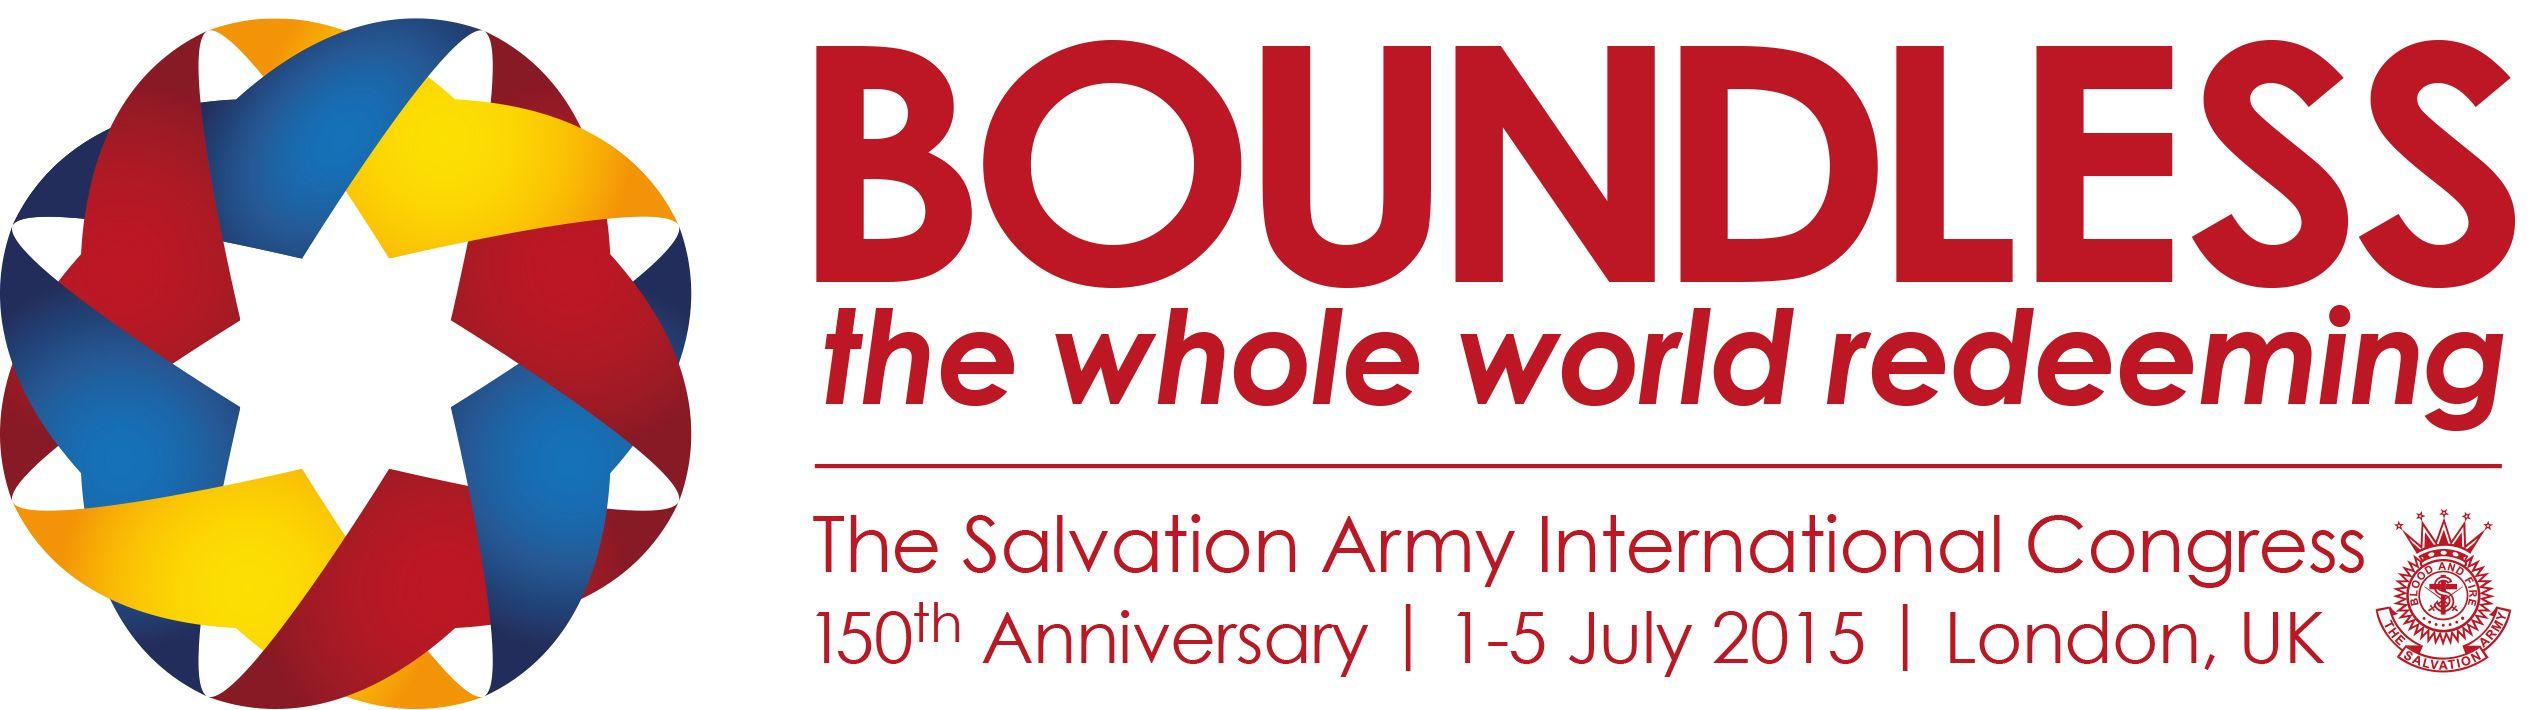 Salvation Army Logo - Boundless 2015 - Logo Downloads